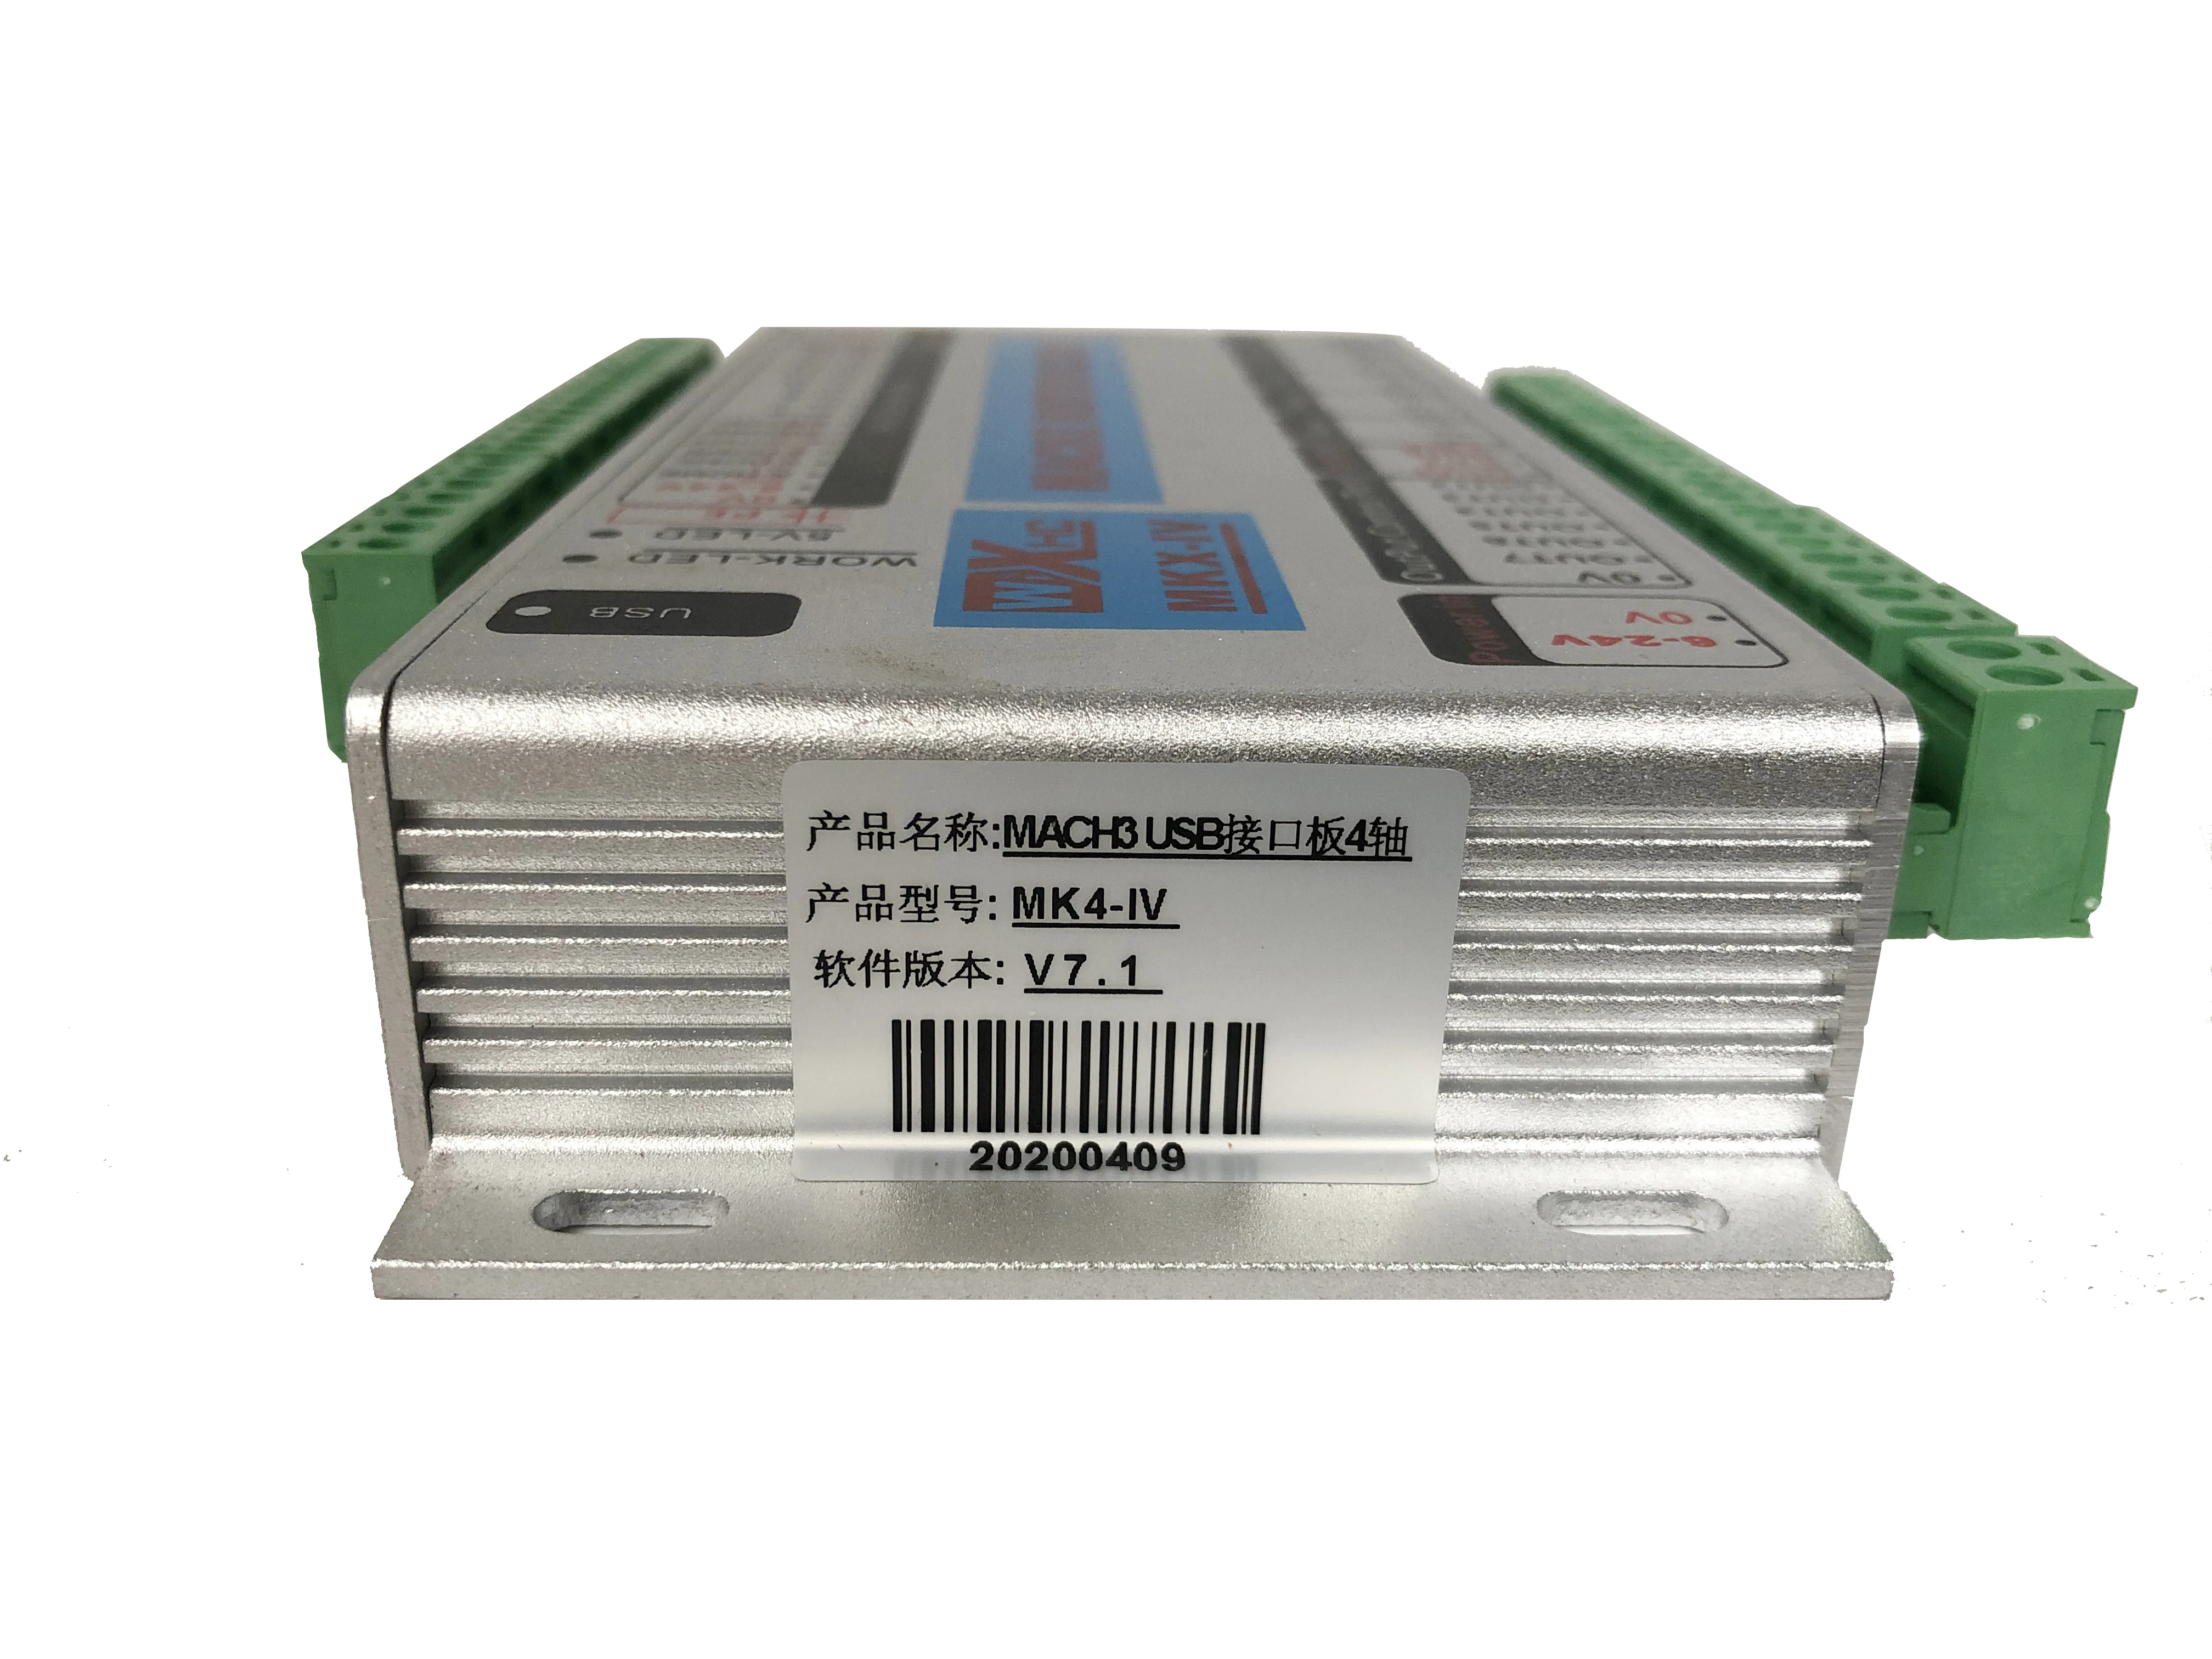 CNC Judesio kortelės WHXC MK4-V 4AXIS USB/Ethernet MACH3 valdiklio plokštės 2000khz Impulso produkcija CNC